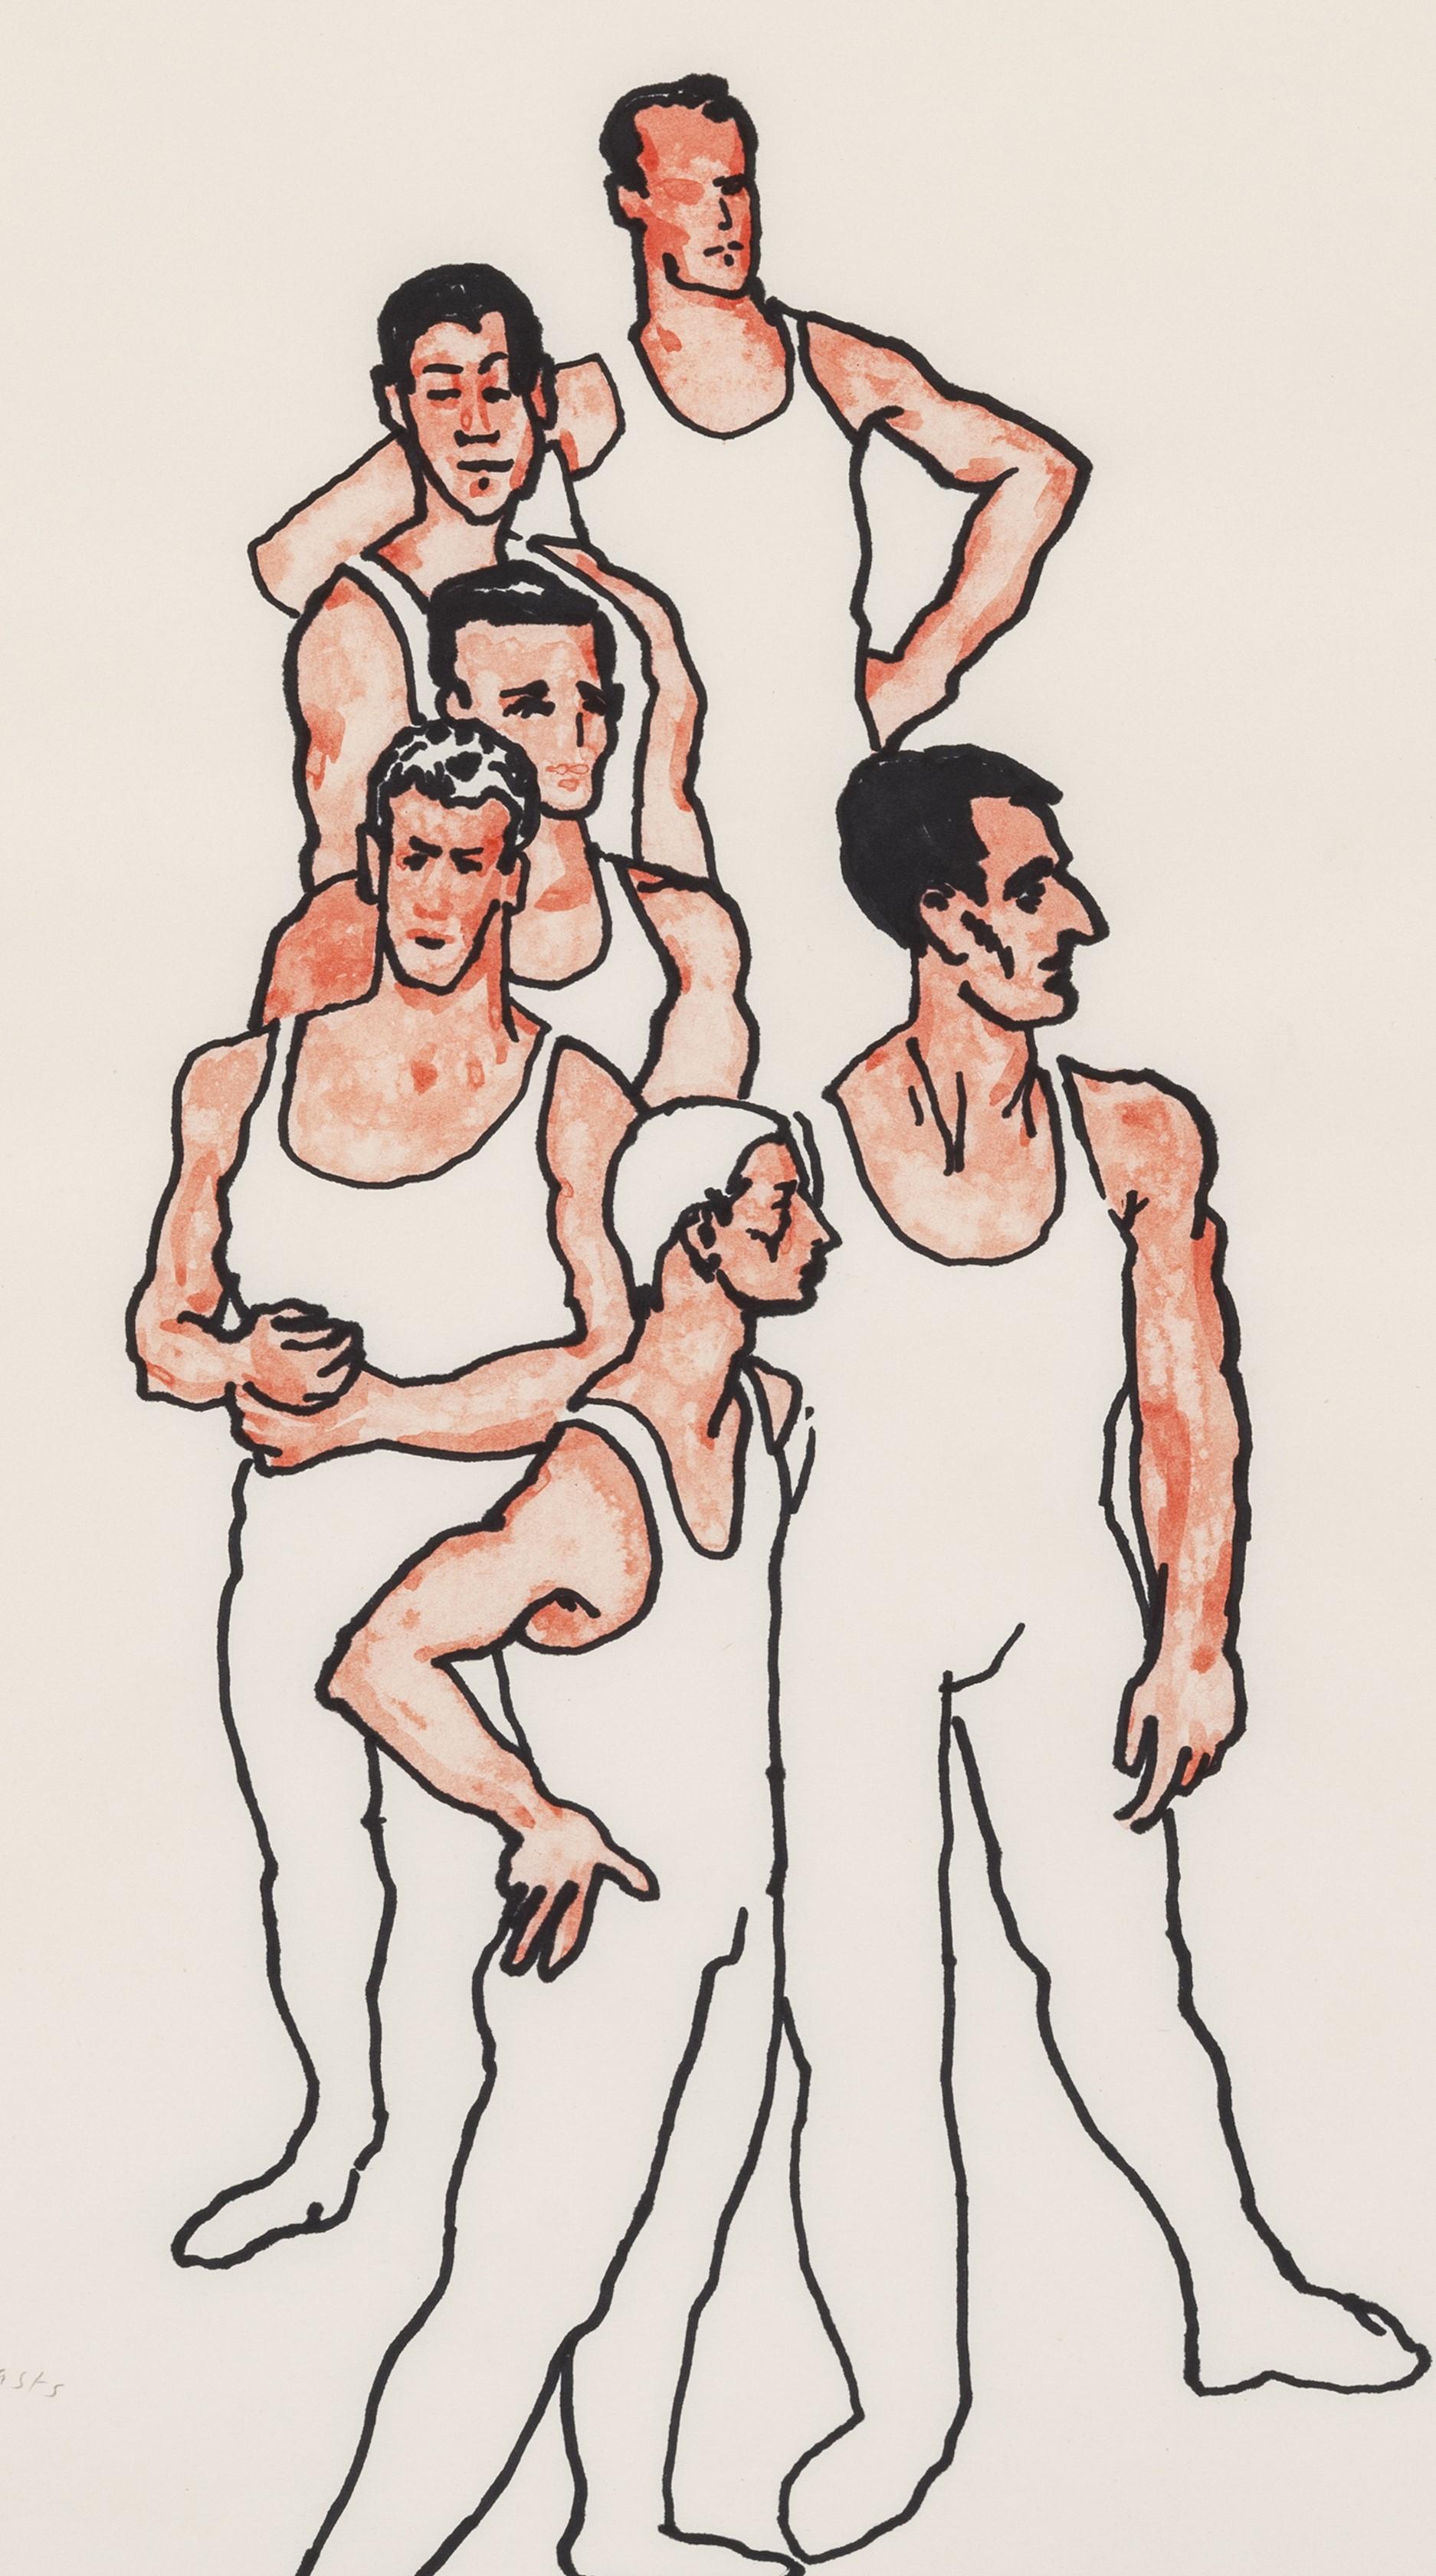 Six Soviet Gymnasts - Post-War Art by Patrick Procktor